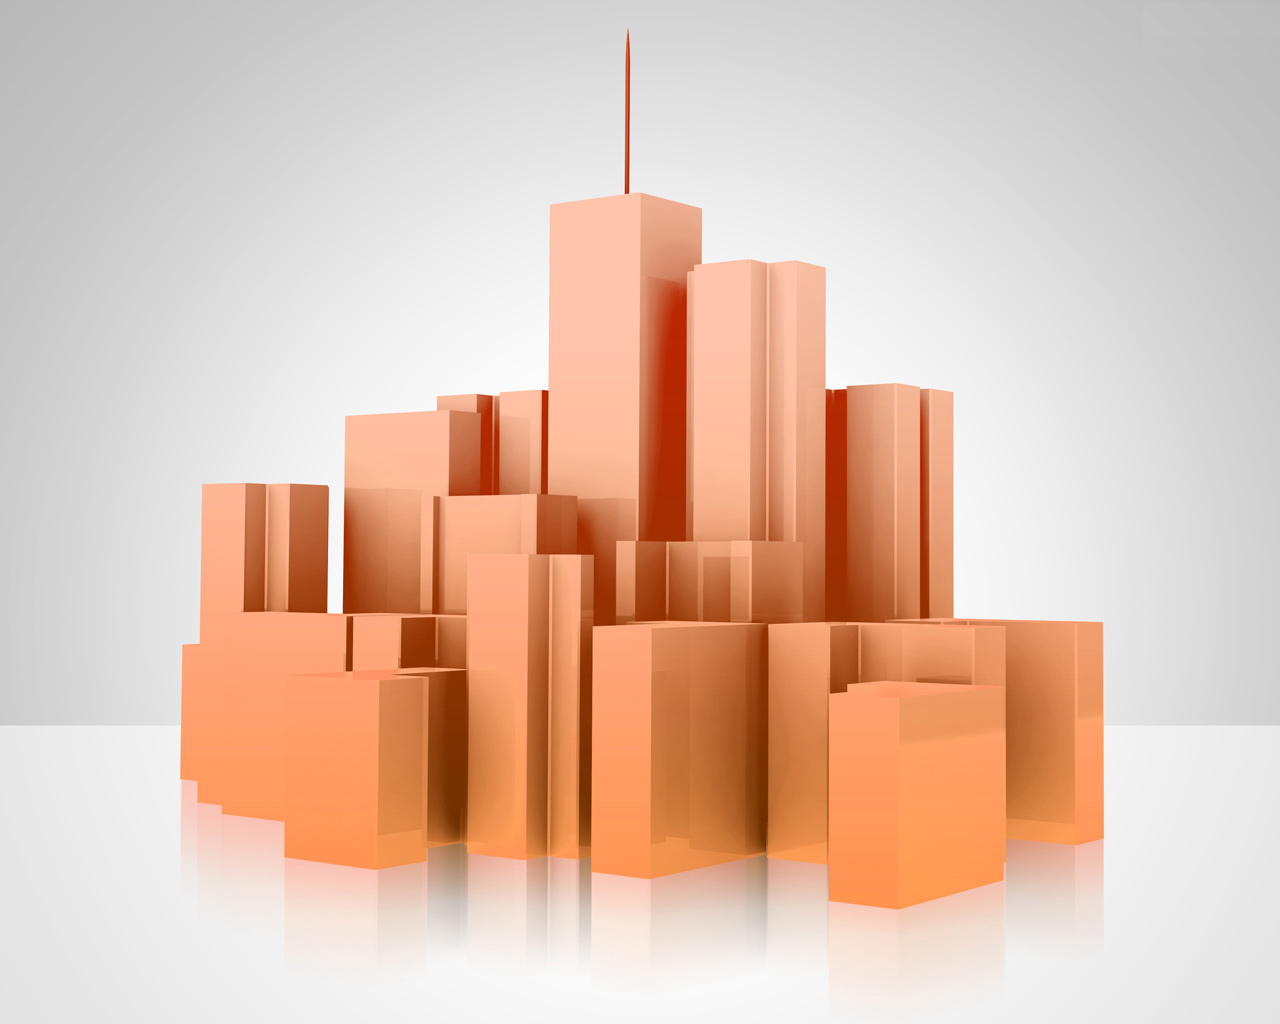 3D City Model PPT Backgrounds